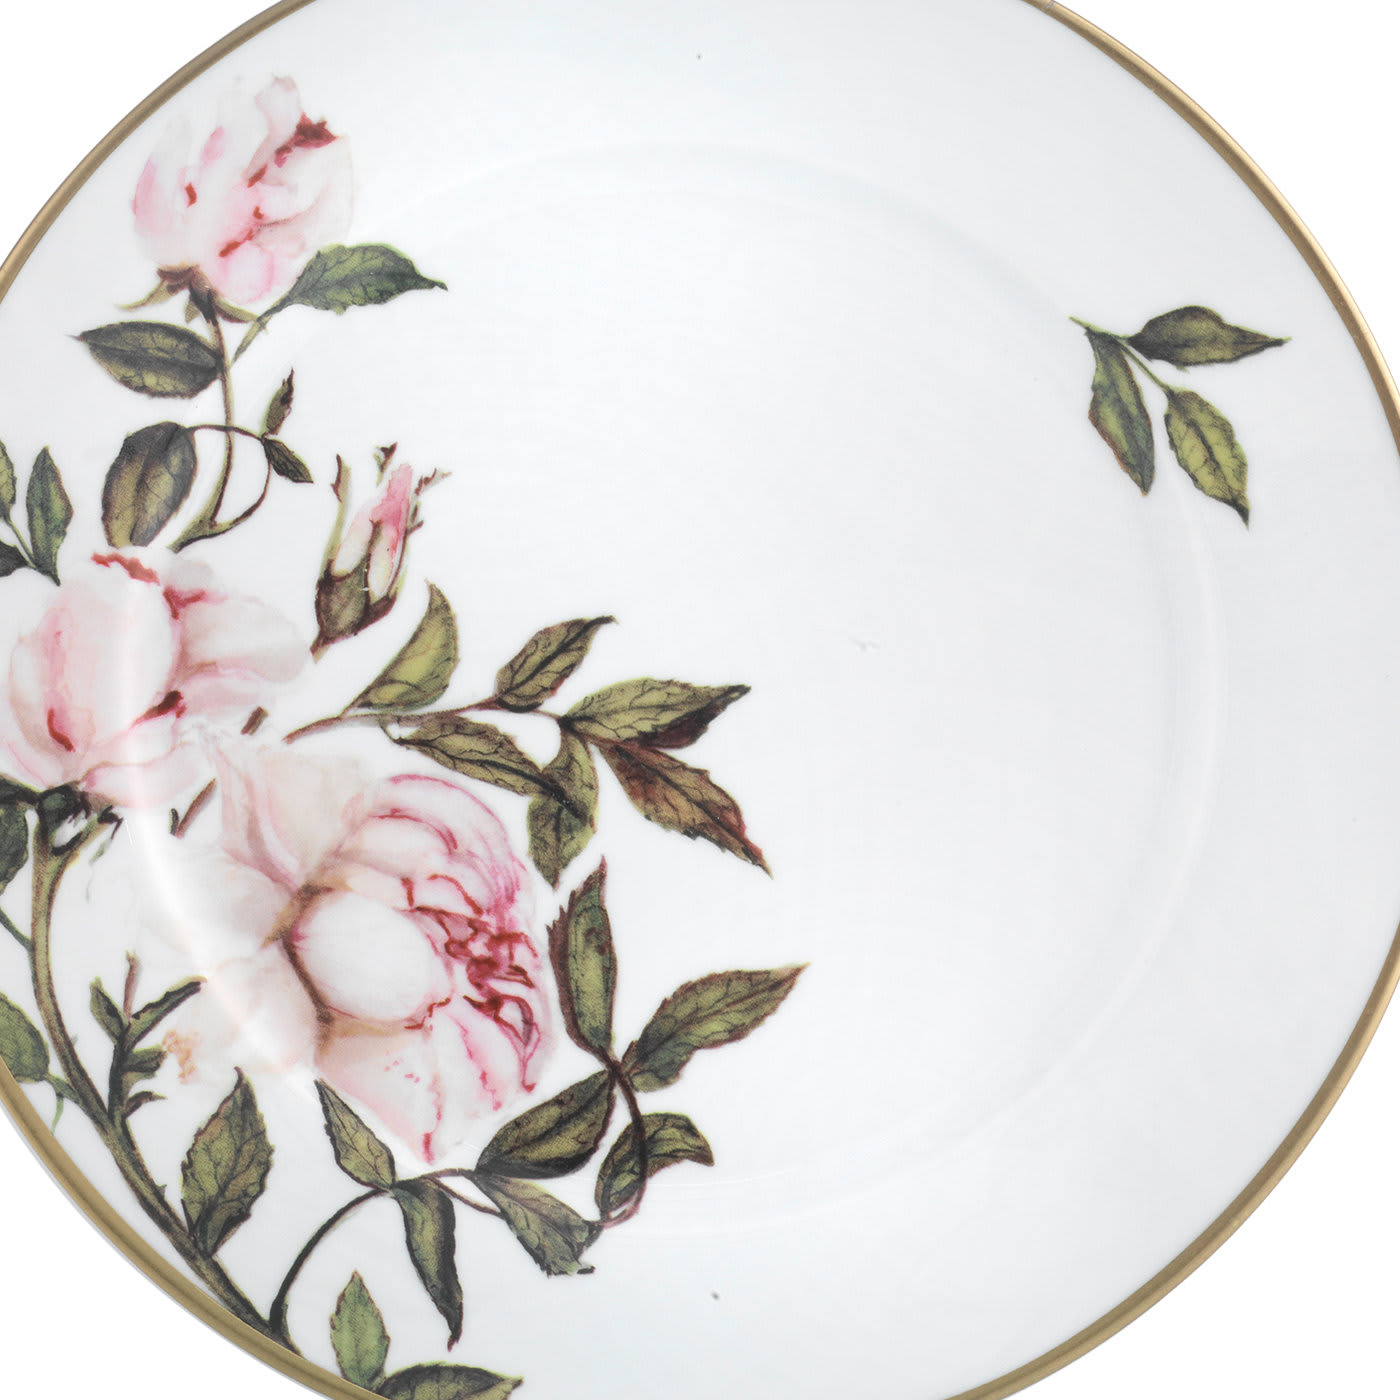 Le Rose Antiche Set of 3 Plates - Paola Caselli